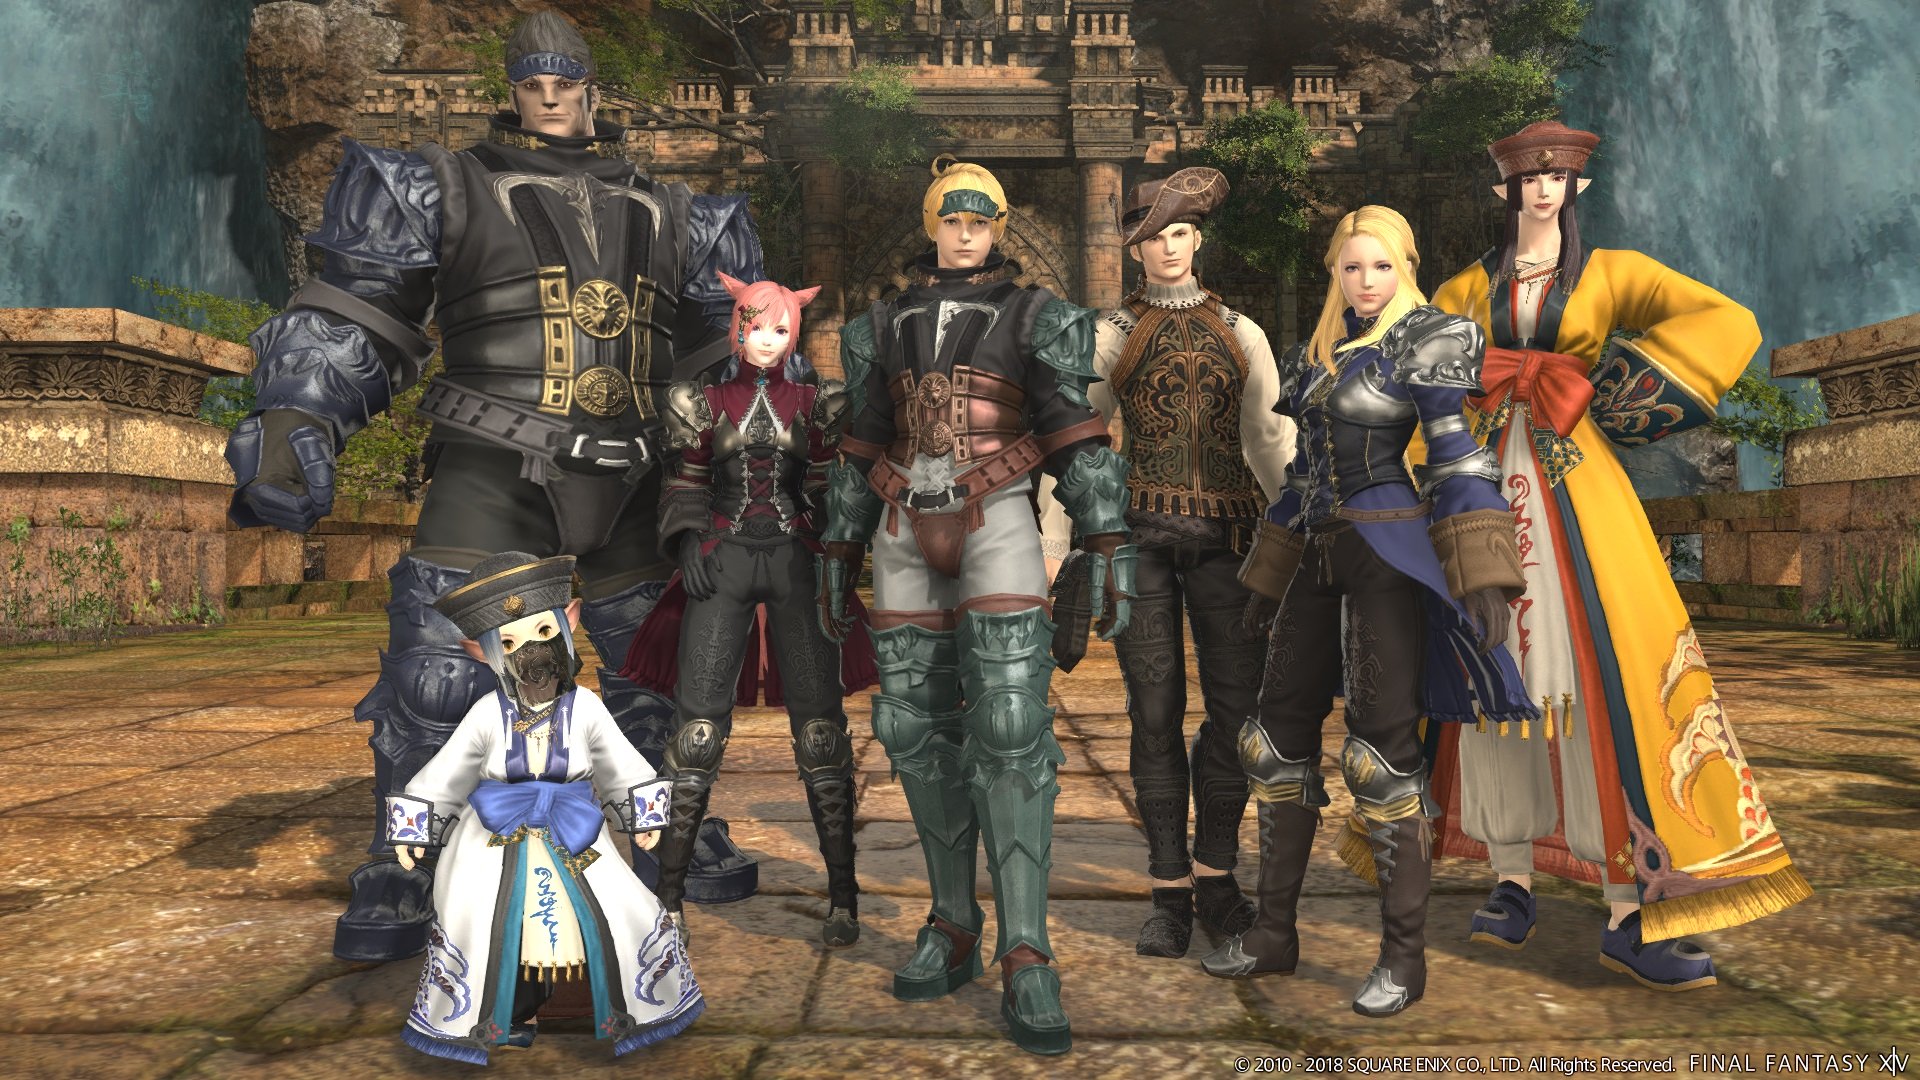 Square Enix offering prints of Final Fantasy XIV screenshots to